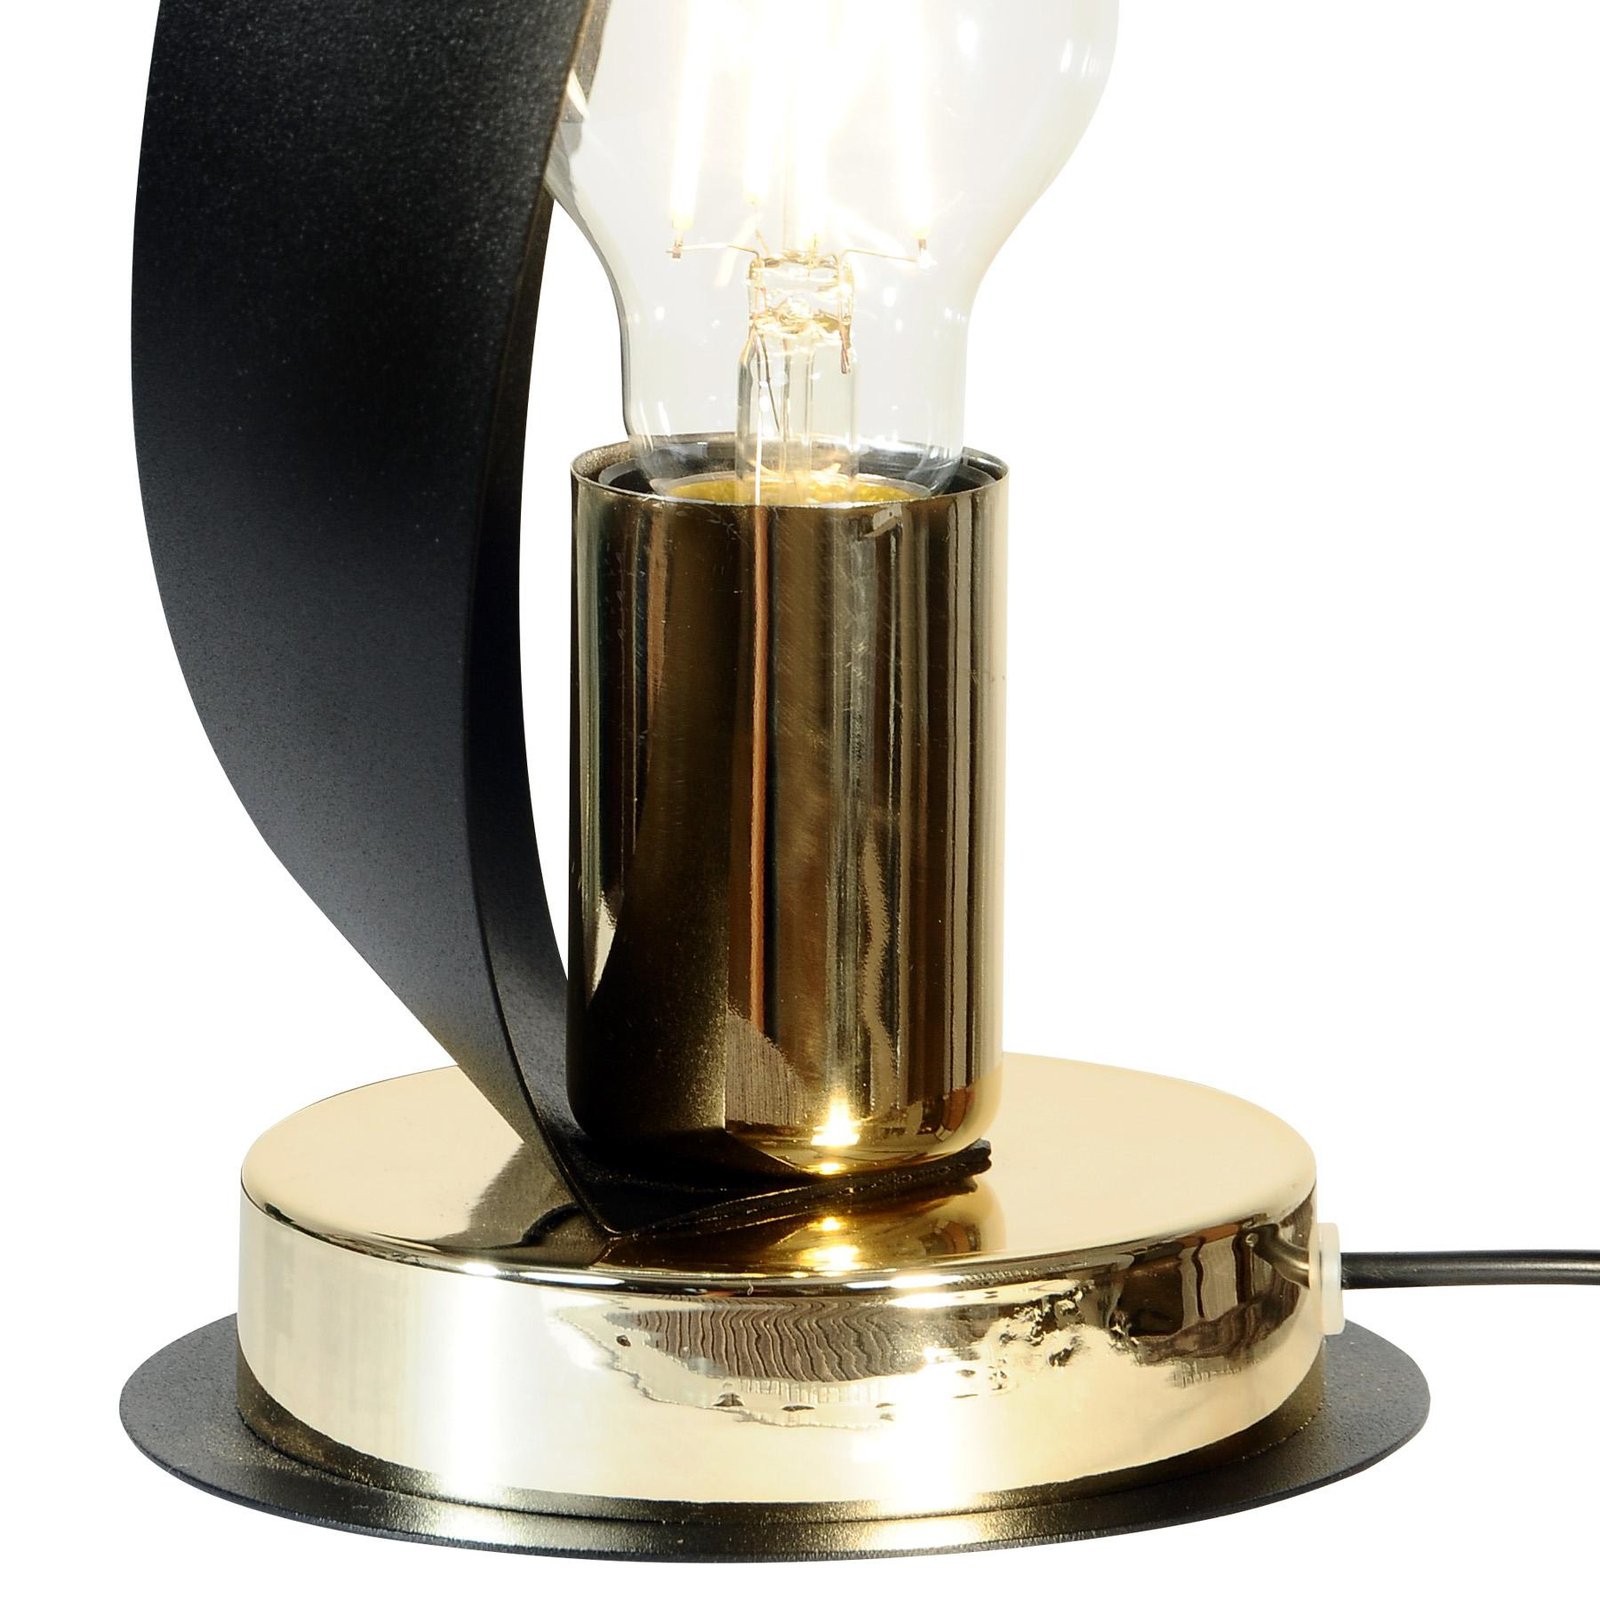 Euluna Petla tafellamp, zwart/goud, metaal, Ø 19 cm